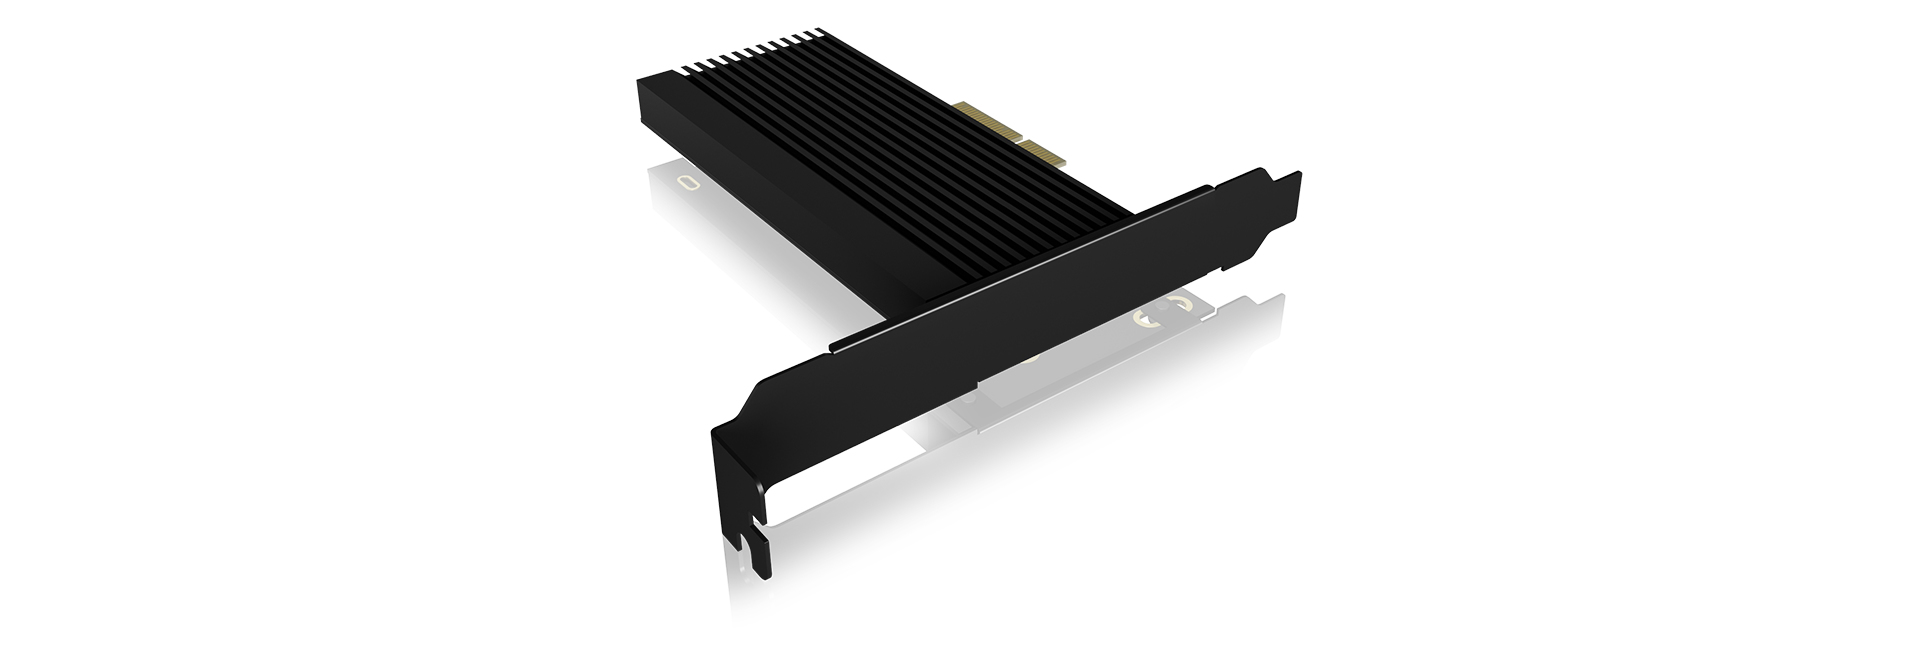 IB-PCI208-HS ICY BOX IB-PCI208-HS - PCIe - M.2 - Full-height / Low-profile - PCIe 4.0 - Black - Passive